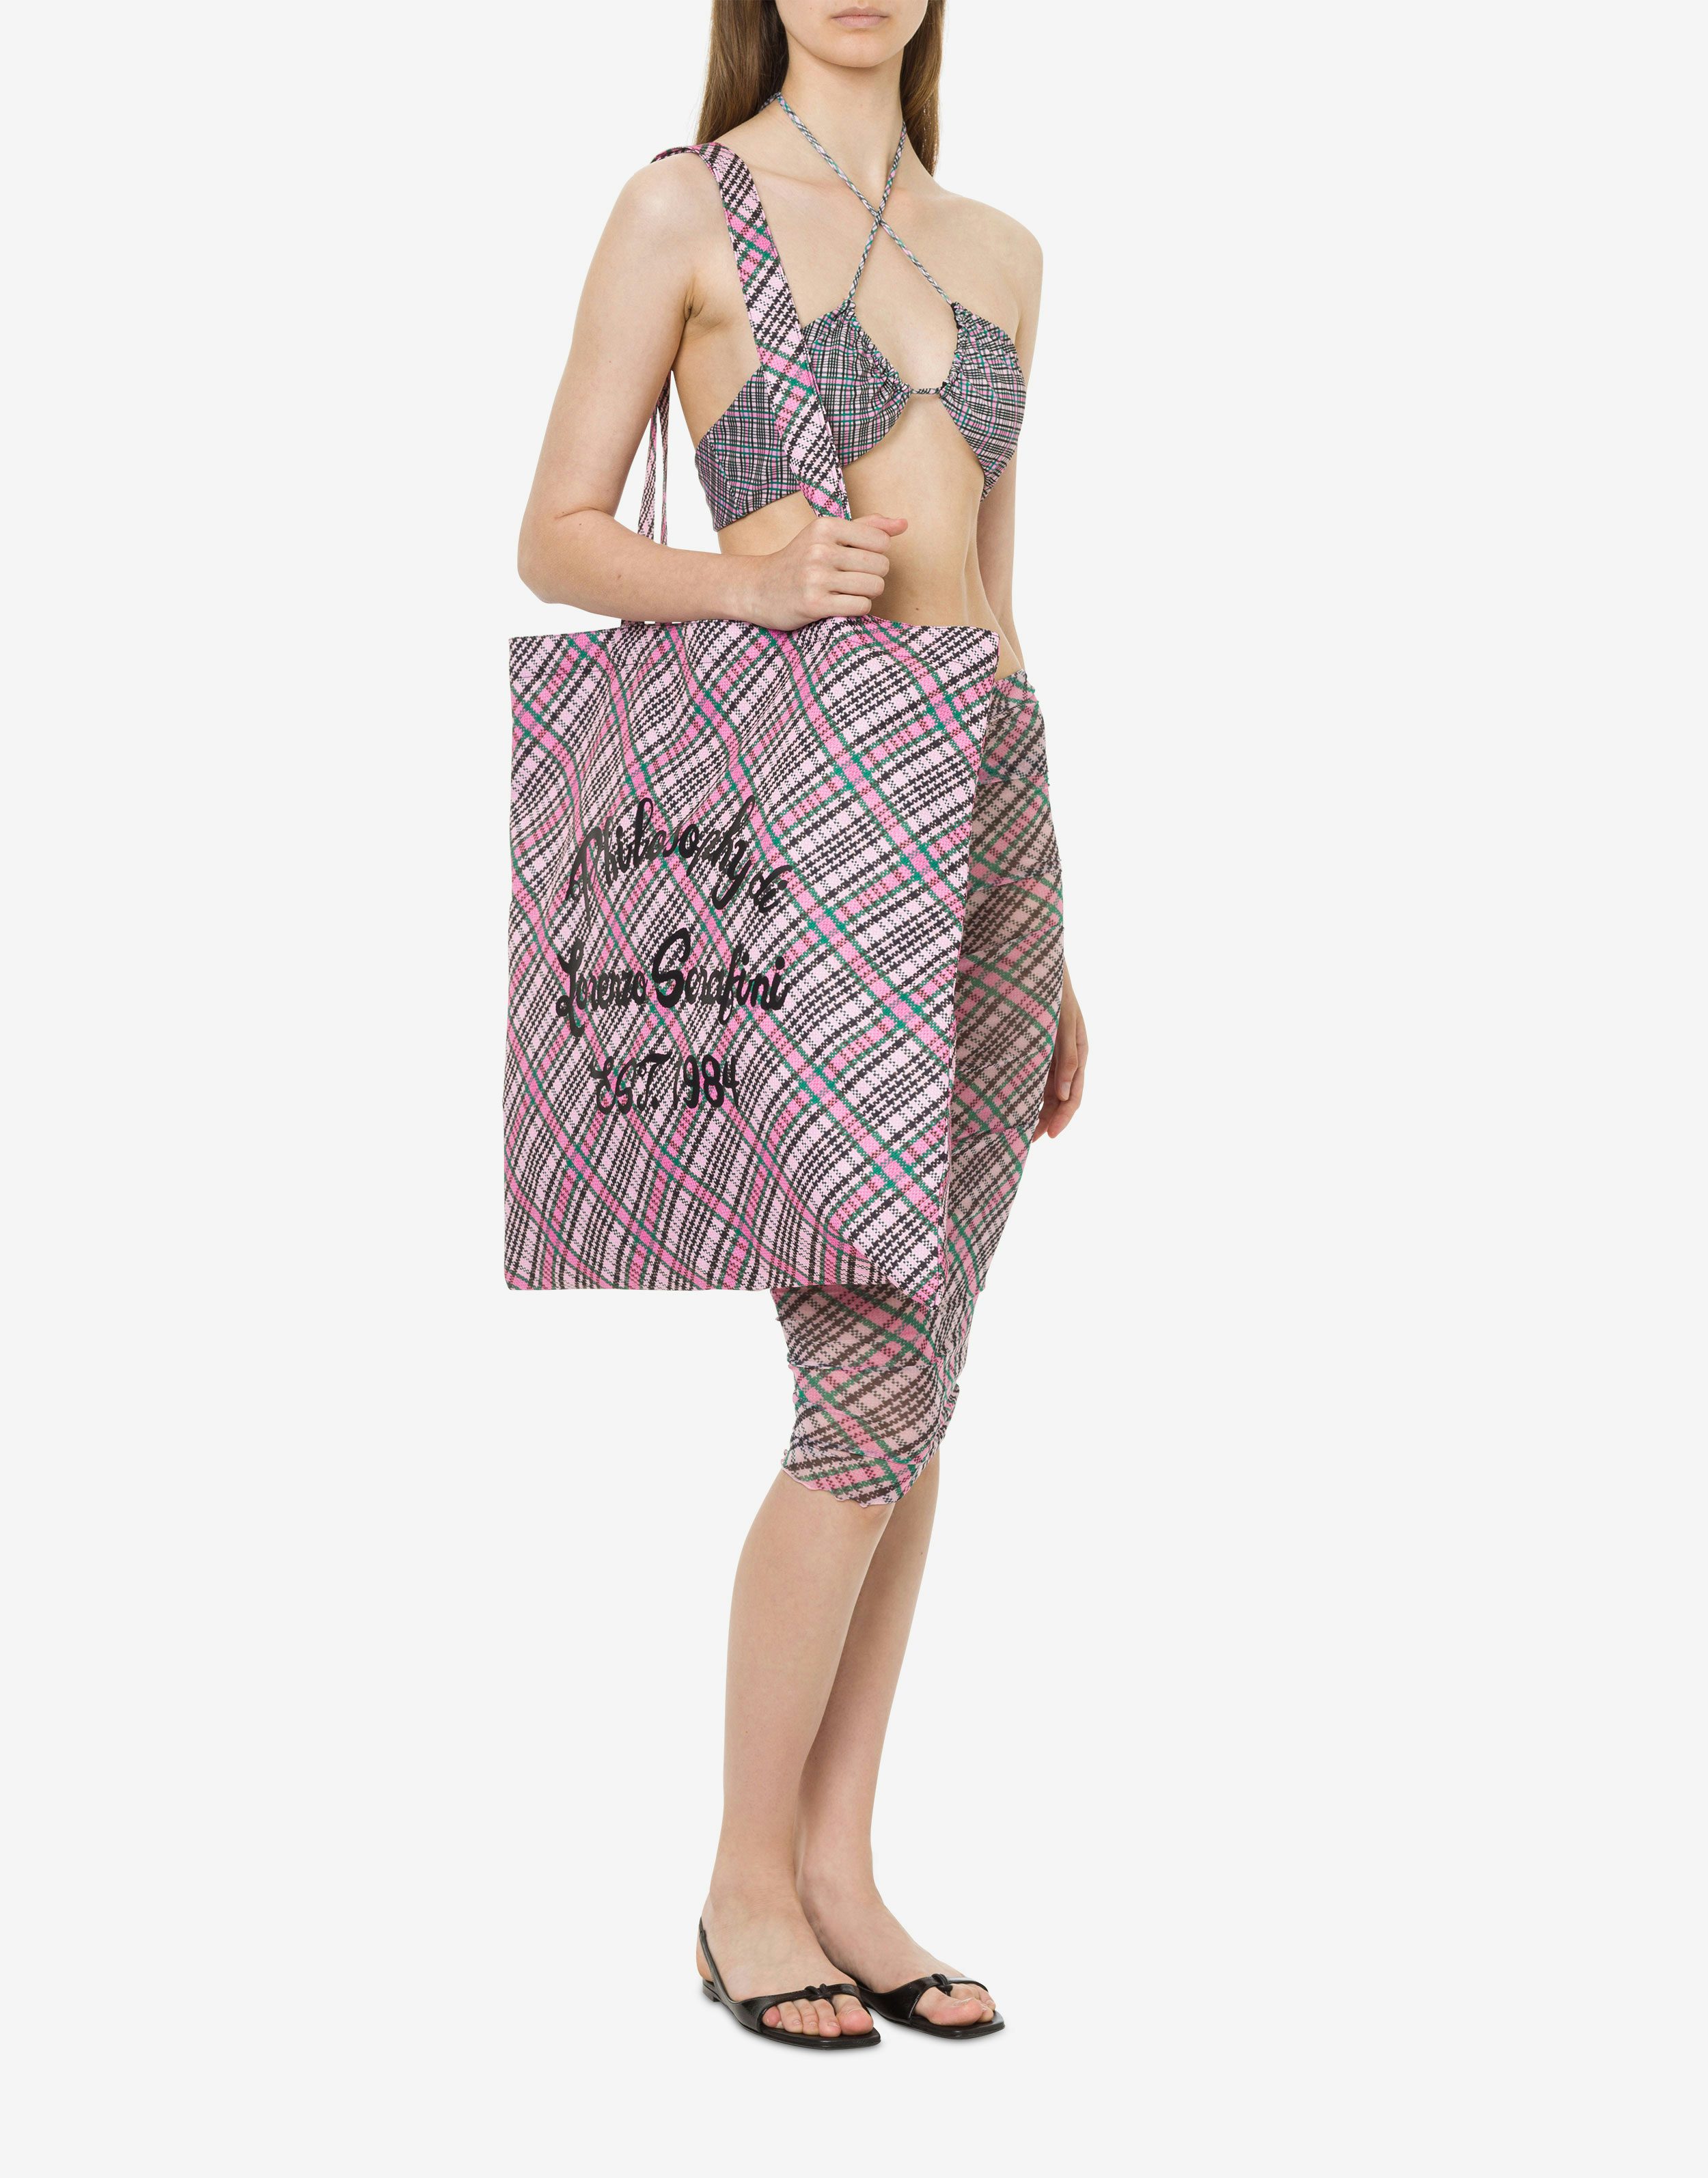 Beachwear tote bag with Check print